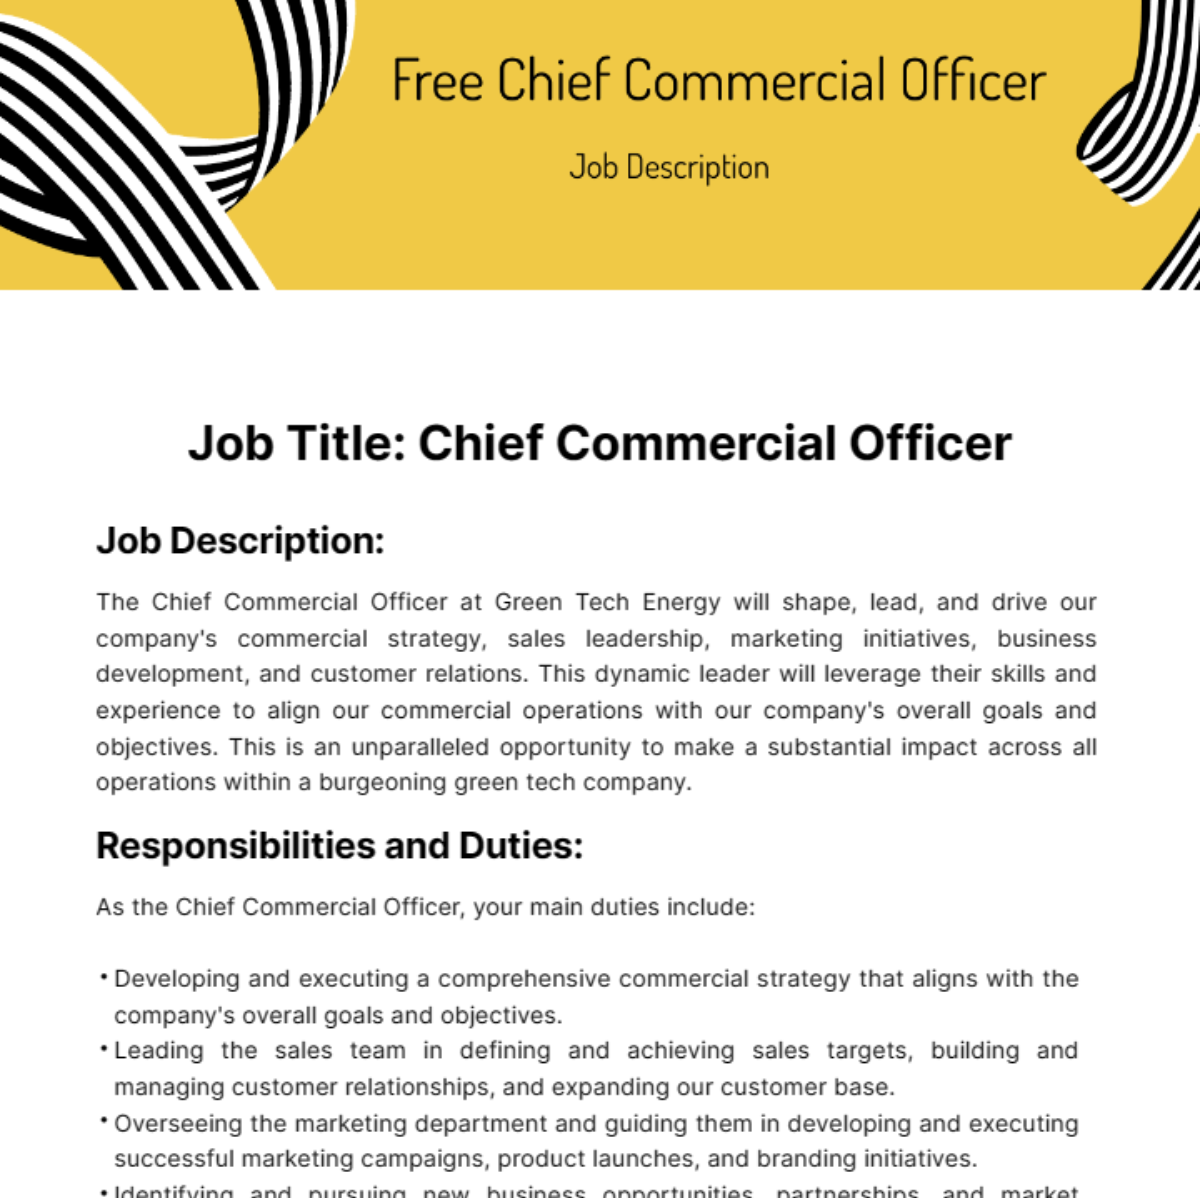 Chief Commercial Officer Job Description Template